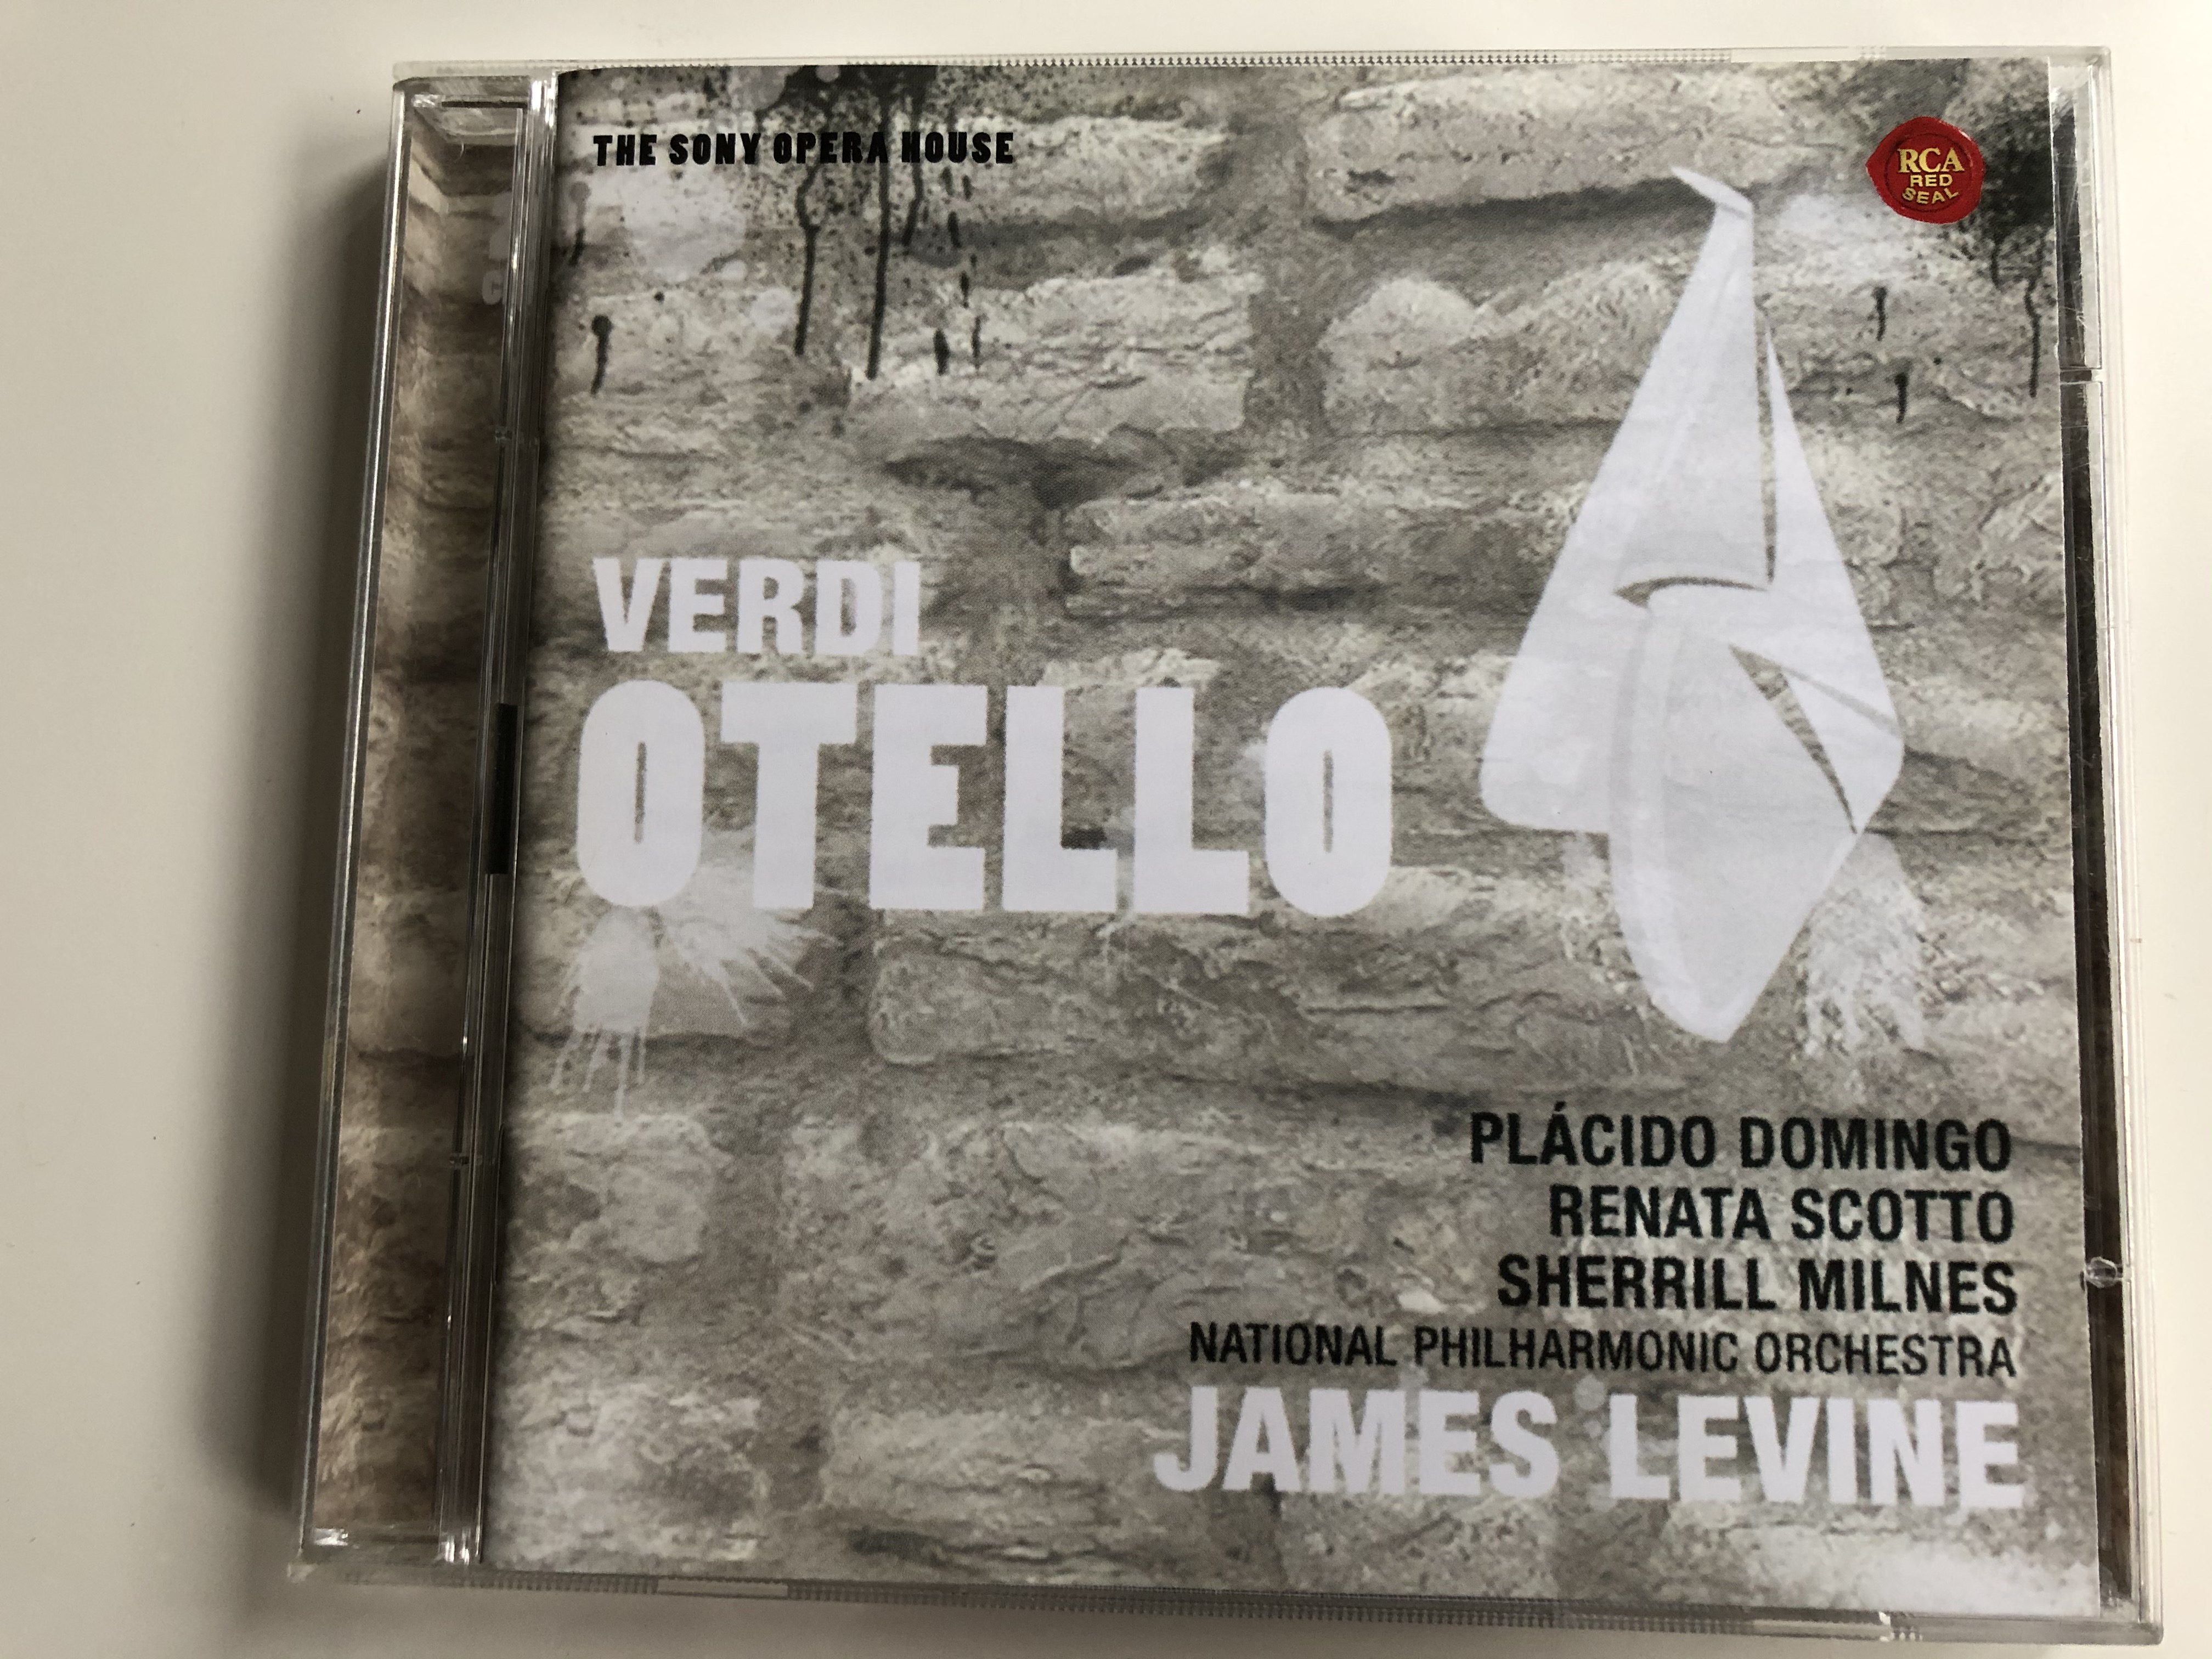 verdi-otello-pl-cido-domingo-renata-scotto-sherrill-milnes-national-philharmonic-orchestra-james-levine-rca-red-seal-2x-audio-cd-2009-08697448202-1-.jpg